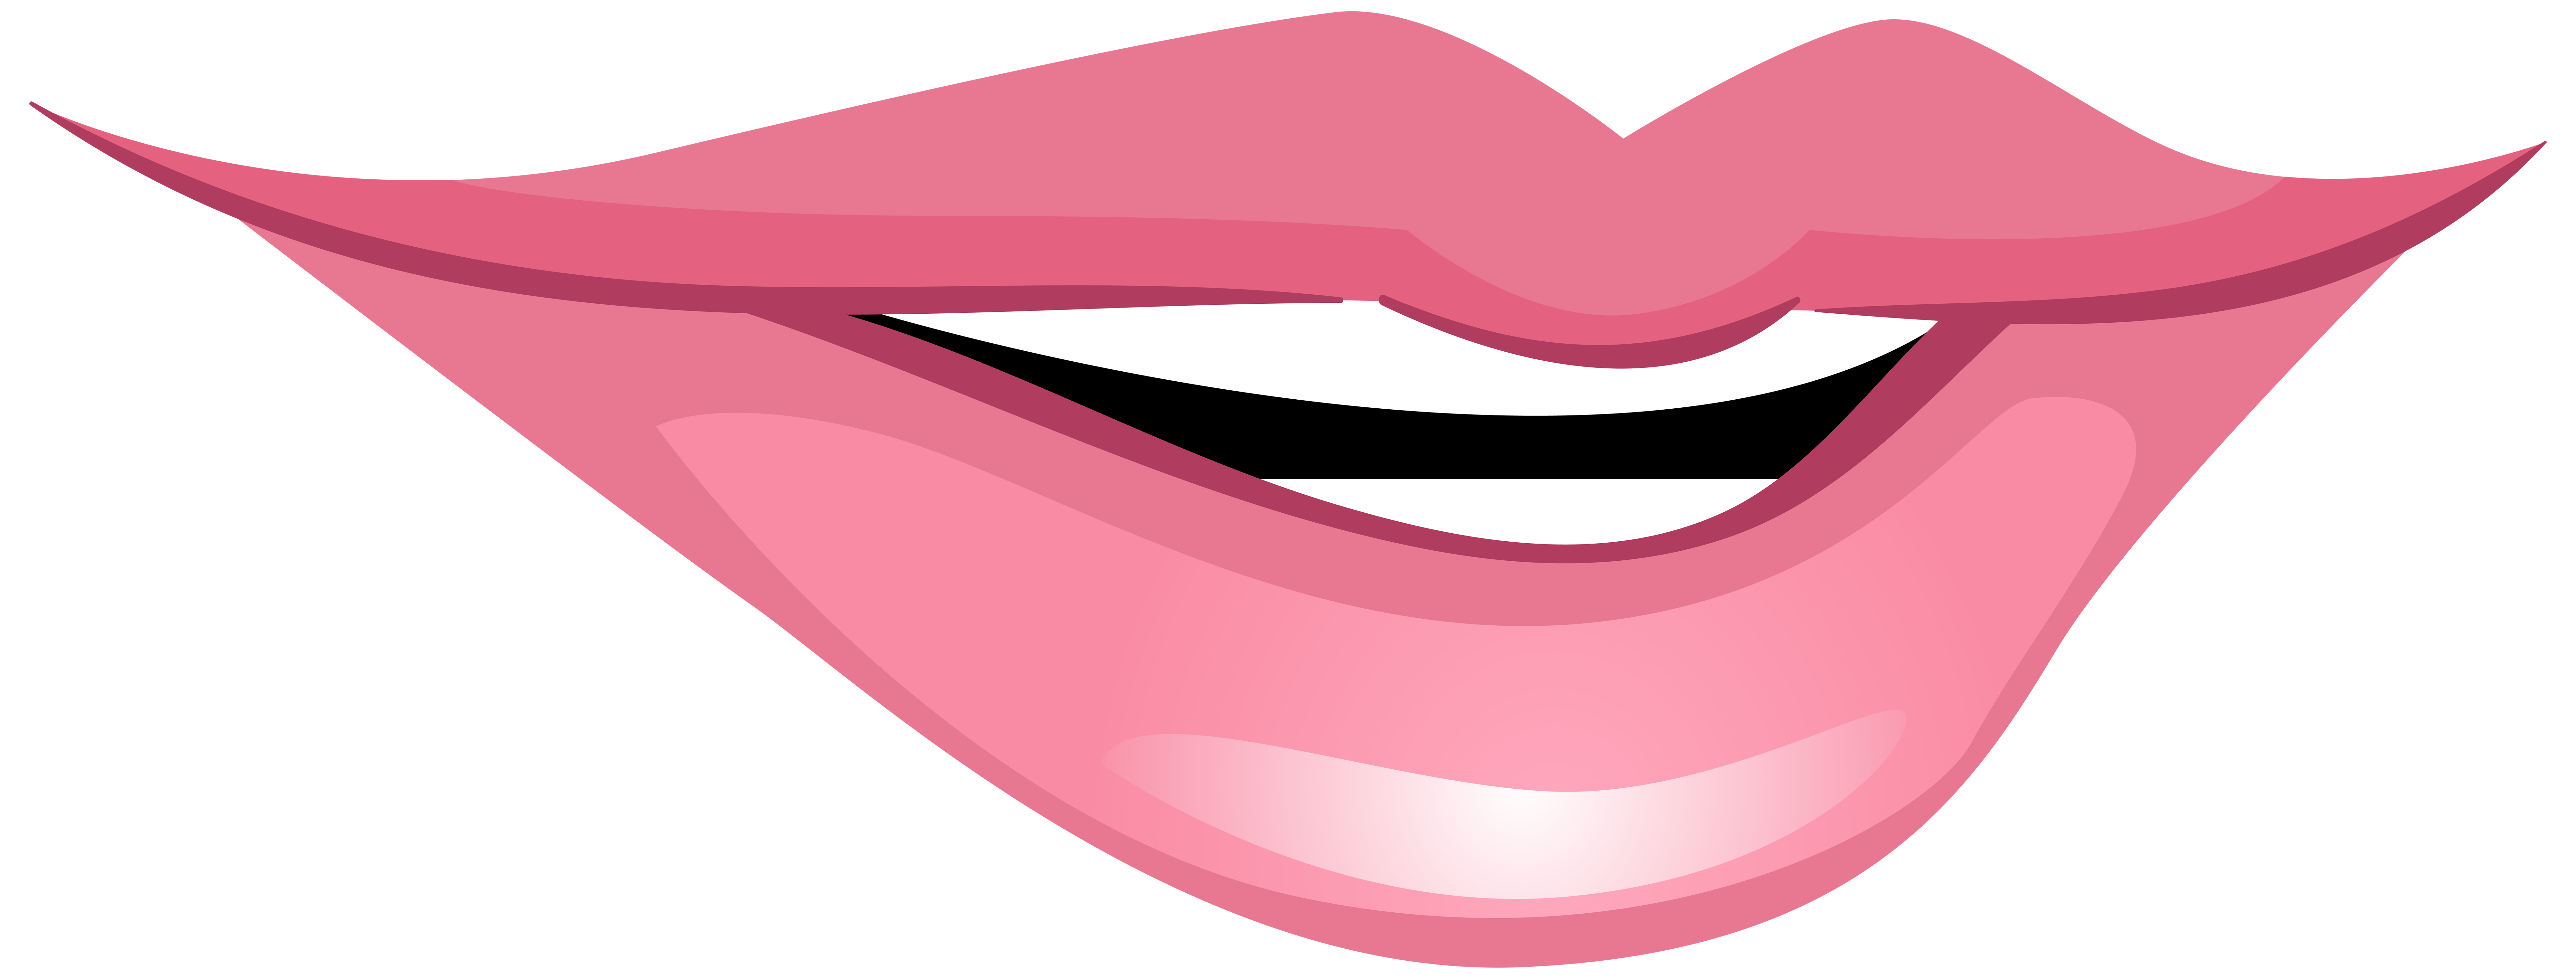 smiling lips clip art free - photo #50